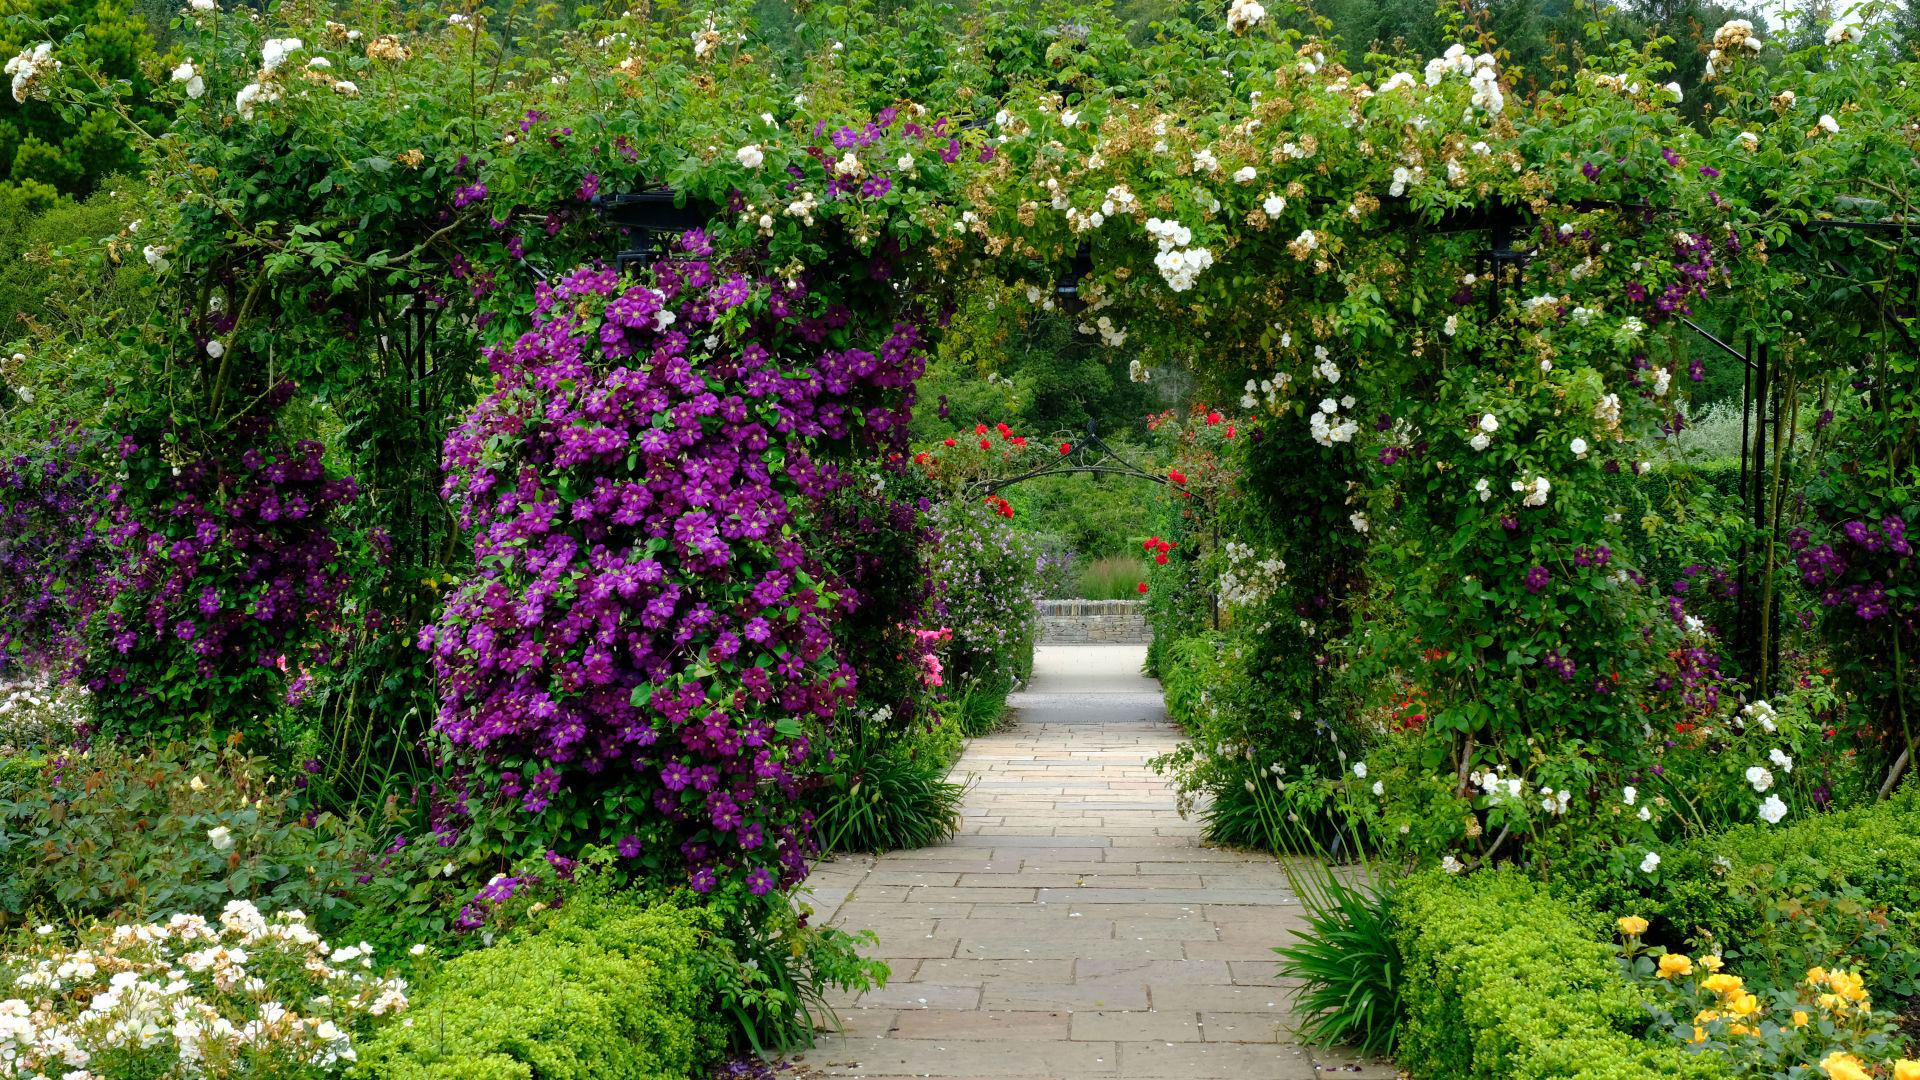 English garden ideas – 11 design tips to get a classic or more informal ...